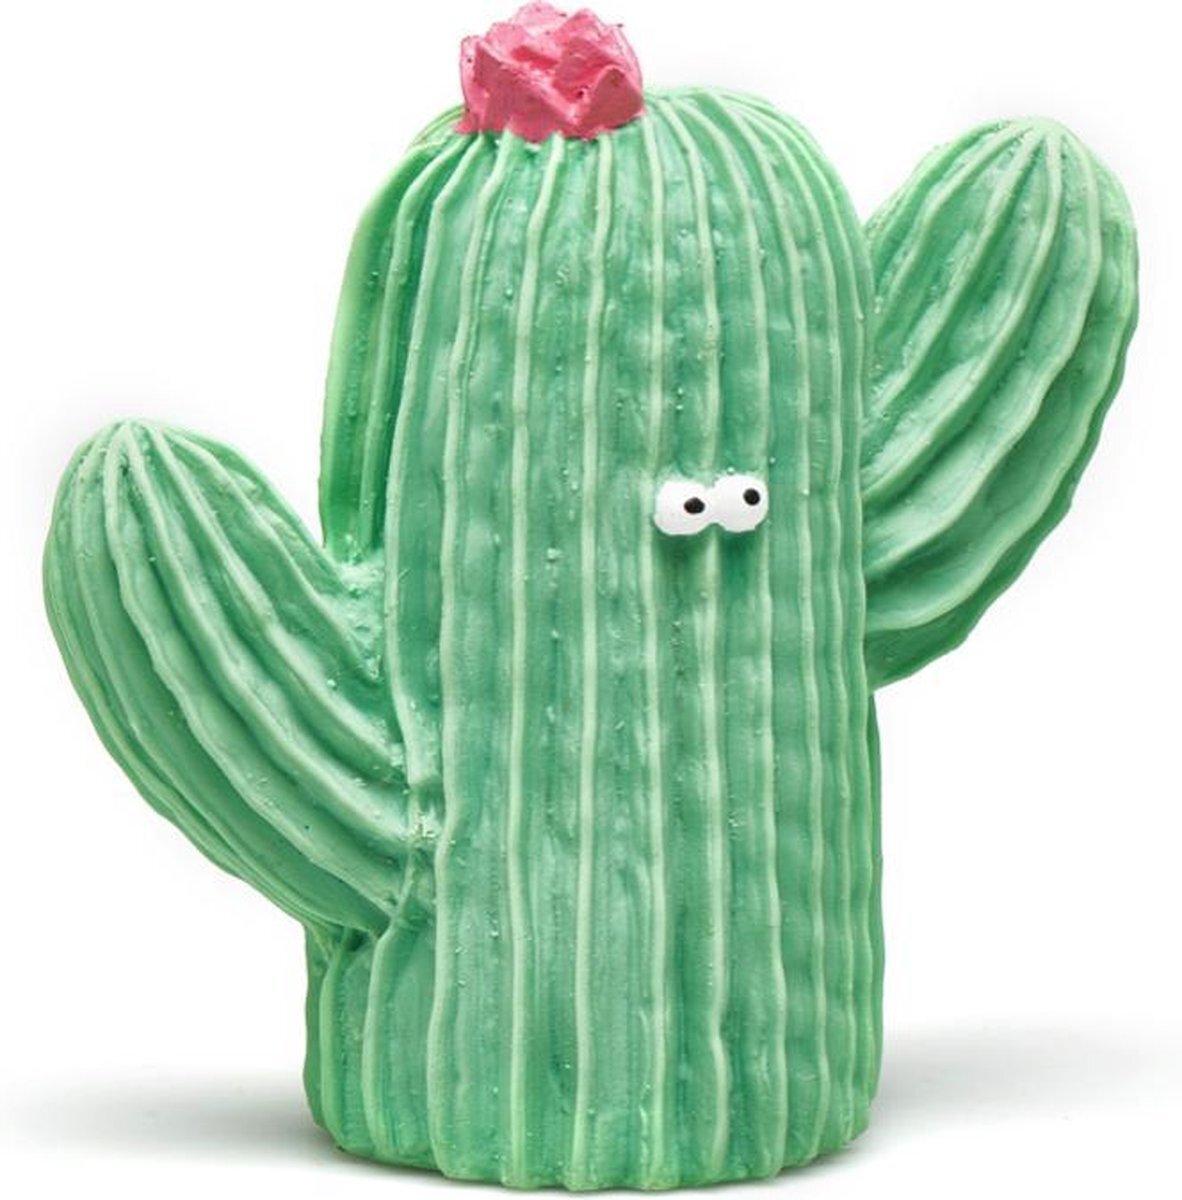 Lanco Toys Lanco sensory rubberen bijtspeeltje - Cactus - groen